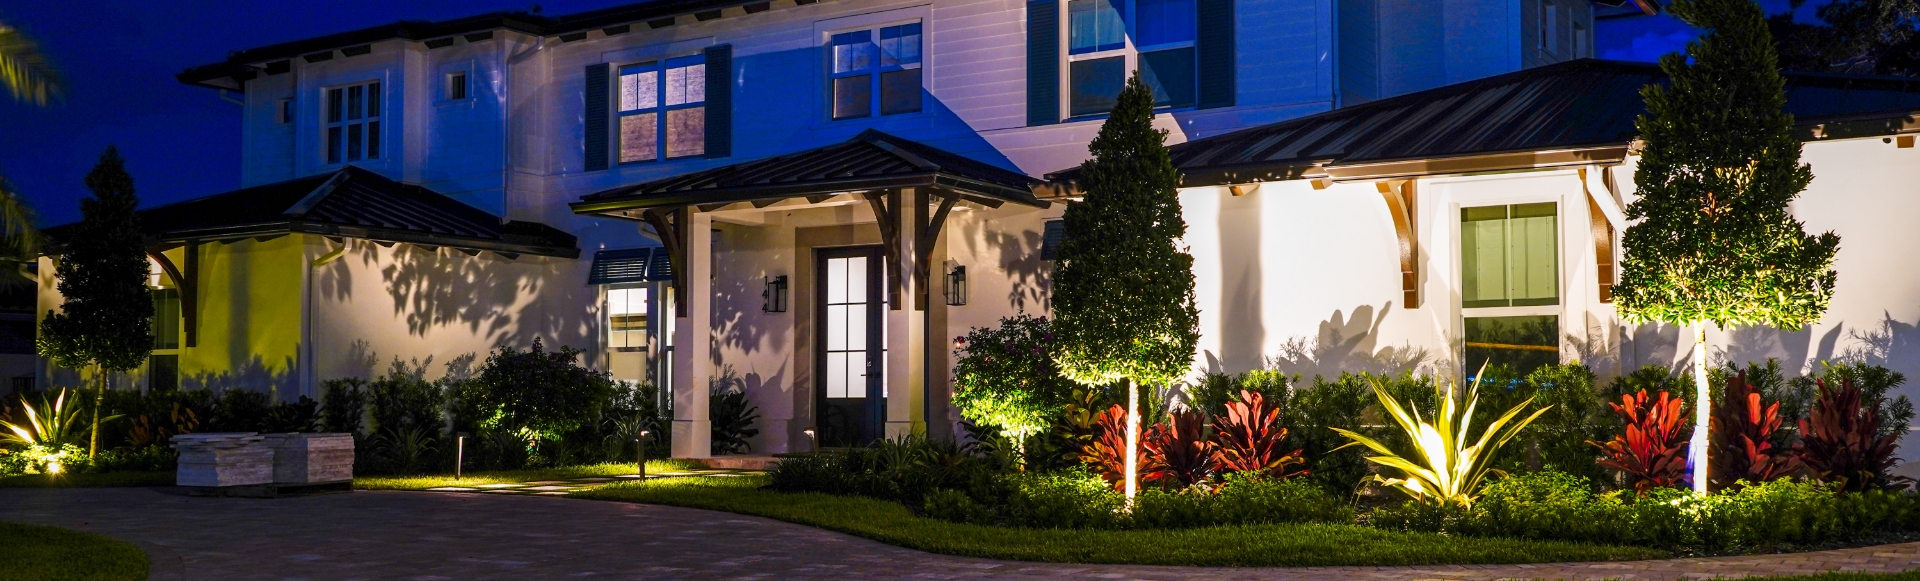 Lighting Design - Complete Backyard Services